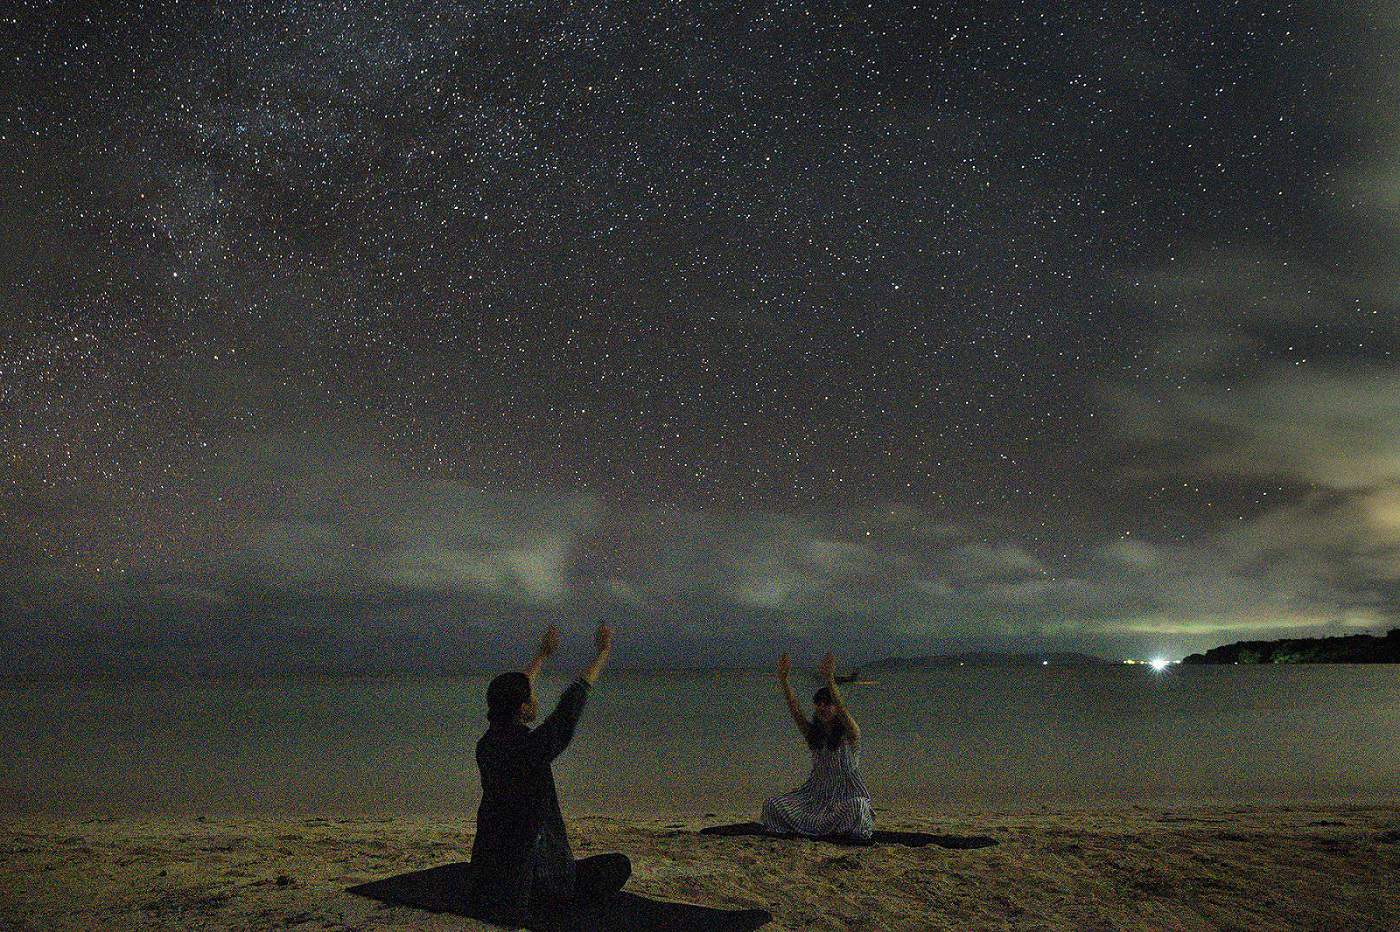 Ryokotomo - 1653316846 707 23613f5b hoshinoya taketomi island offering relaxing starry sky plan for a